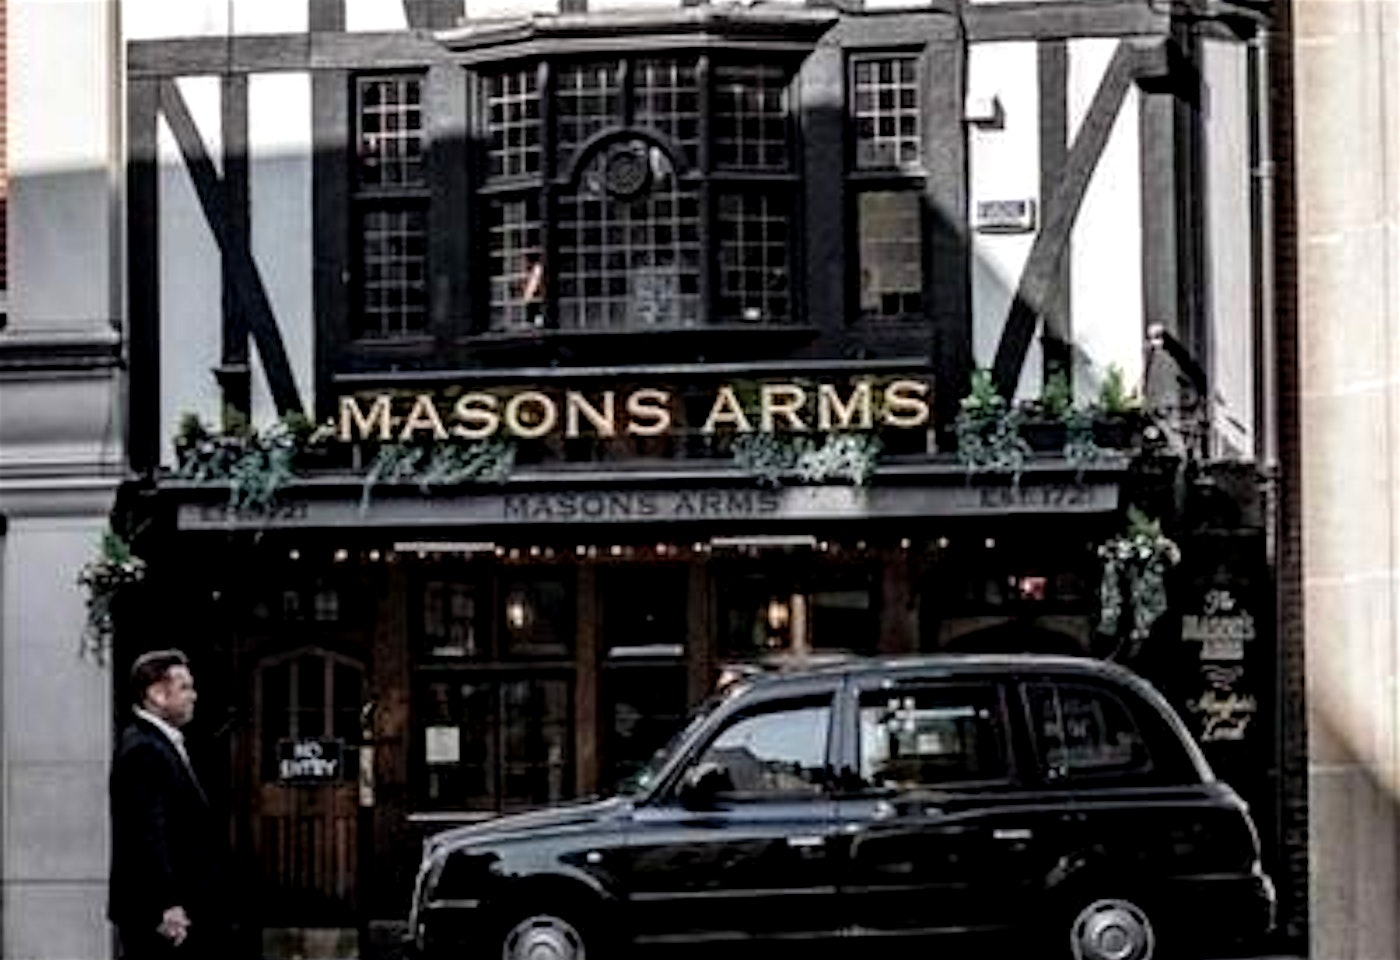 Masons Arms Mayfair pubs 2